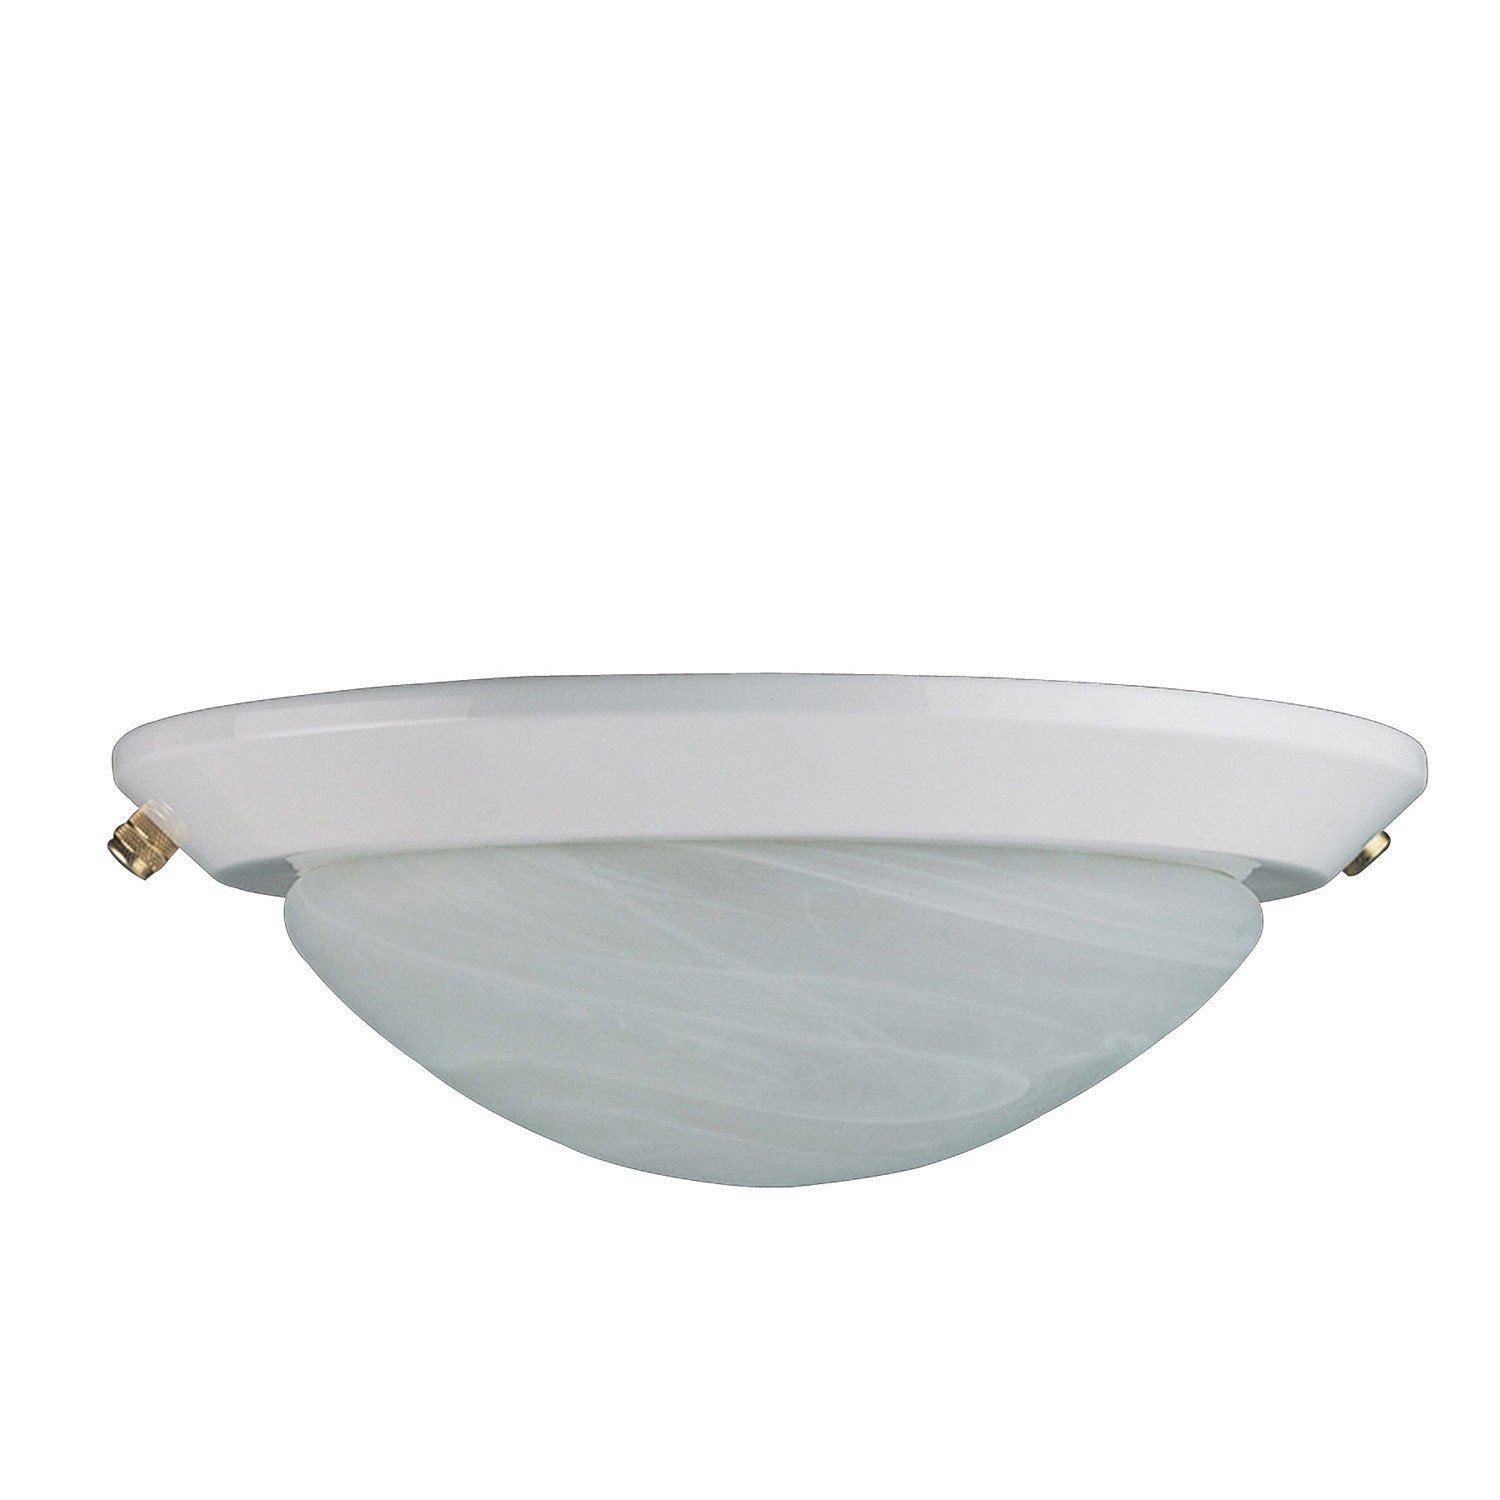 Concord Fans 2 Light White Finish Low Profile Ceiling Fan Light Kit